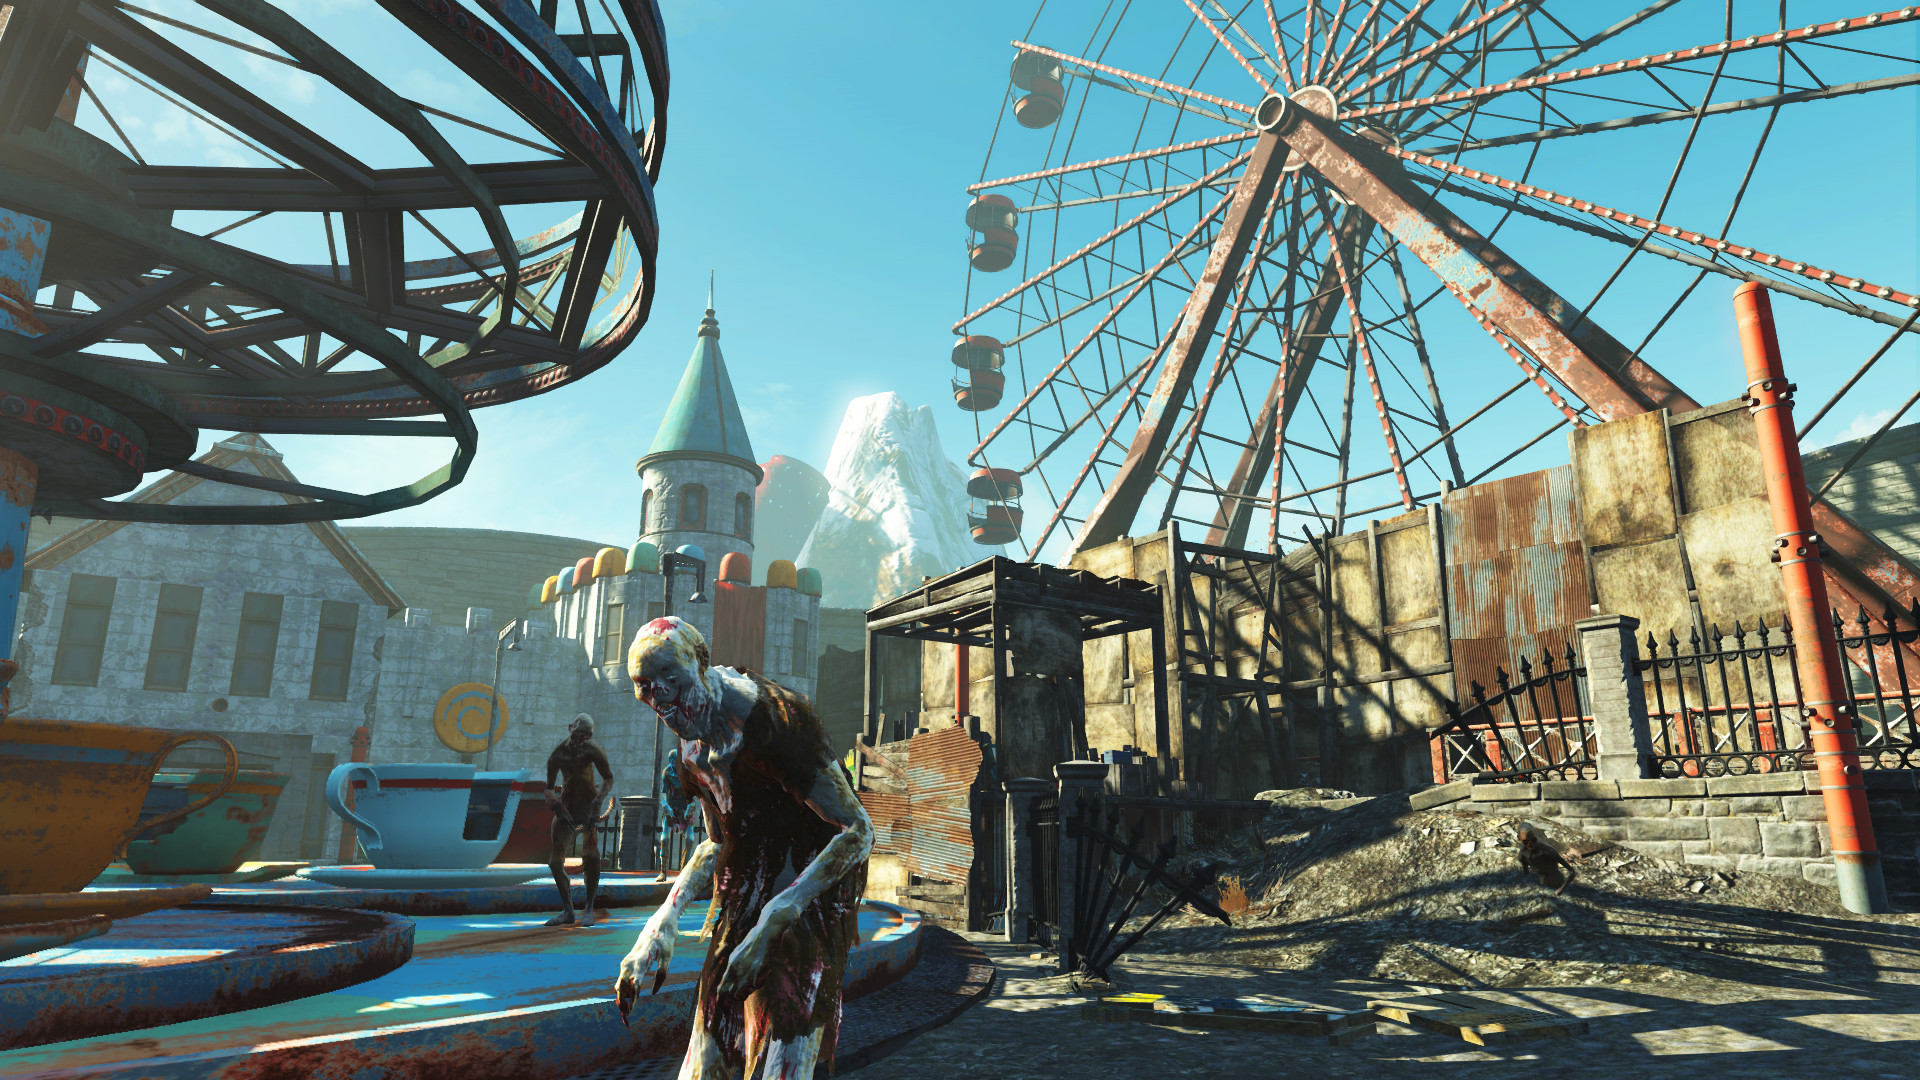 Fallout 4 - Nuka World DLC (Steam key) @ RU